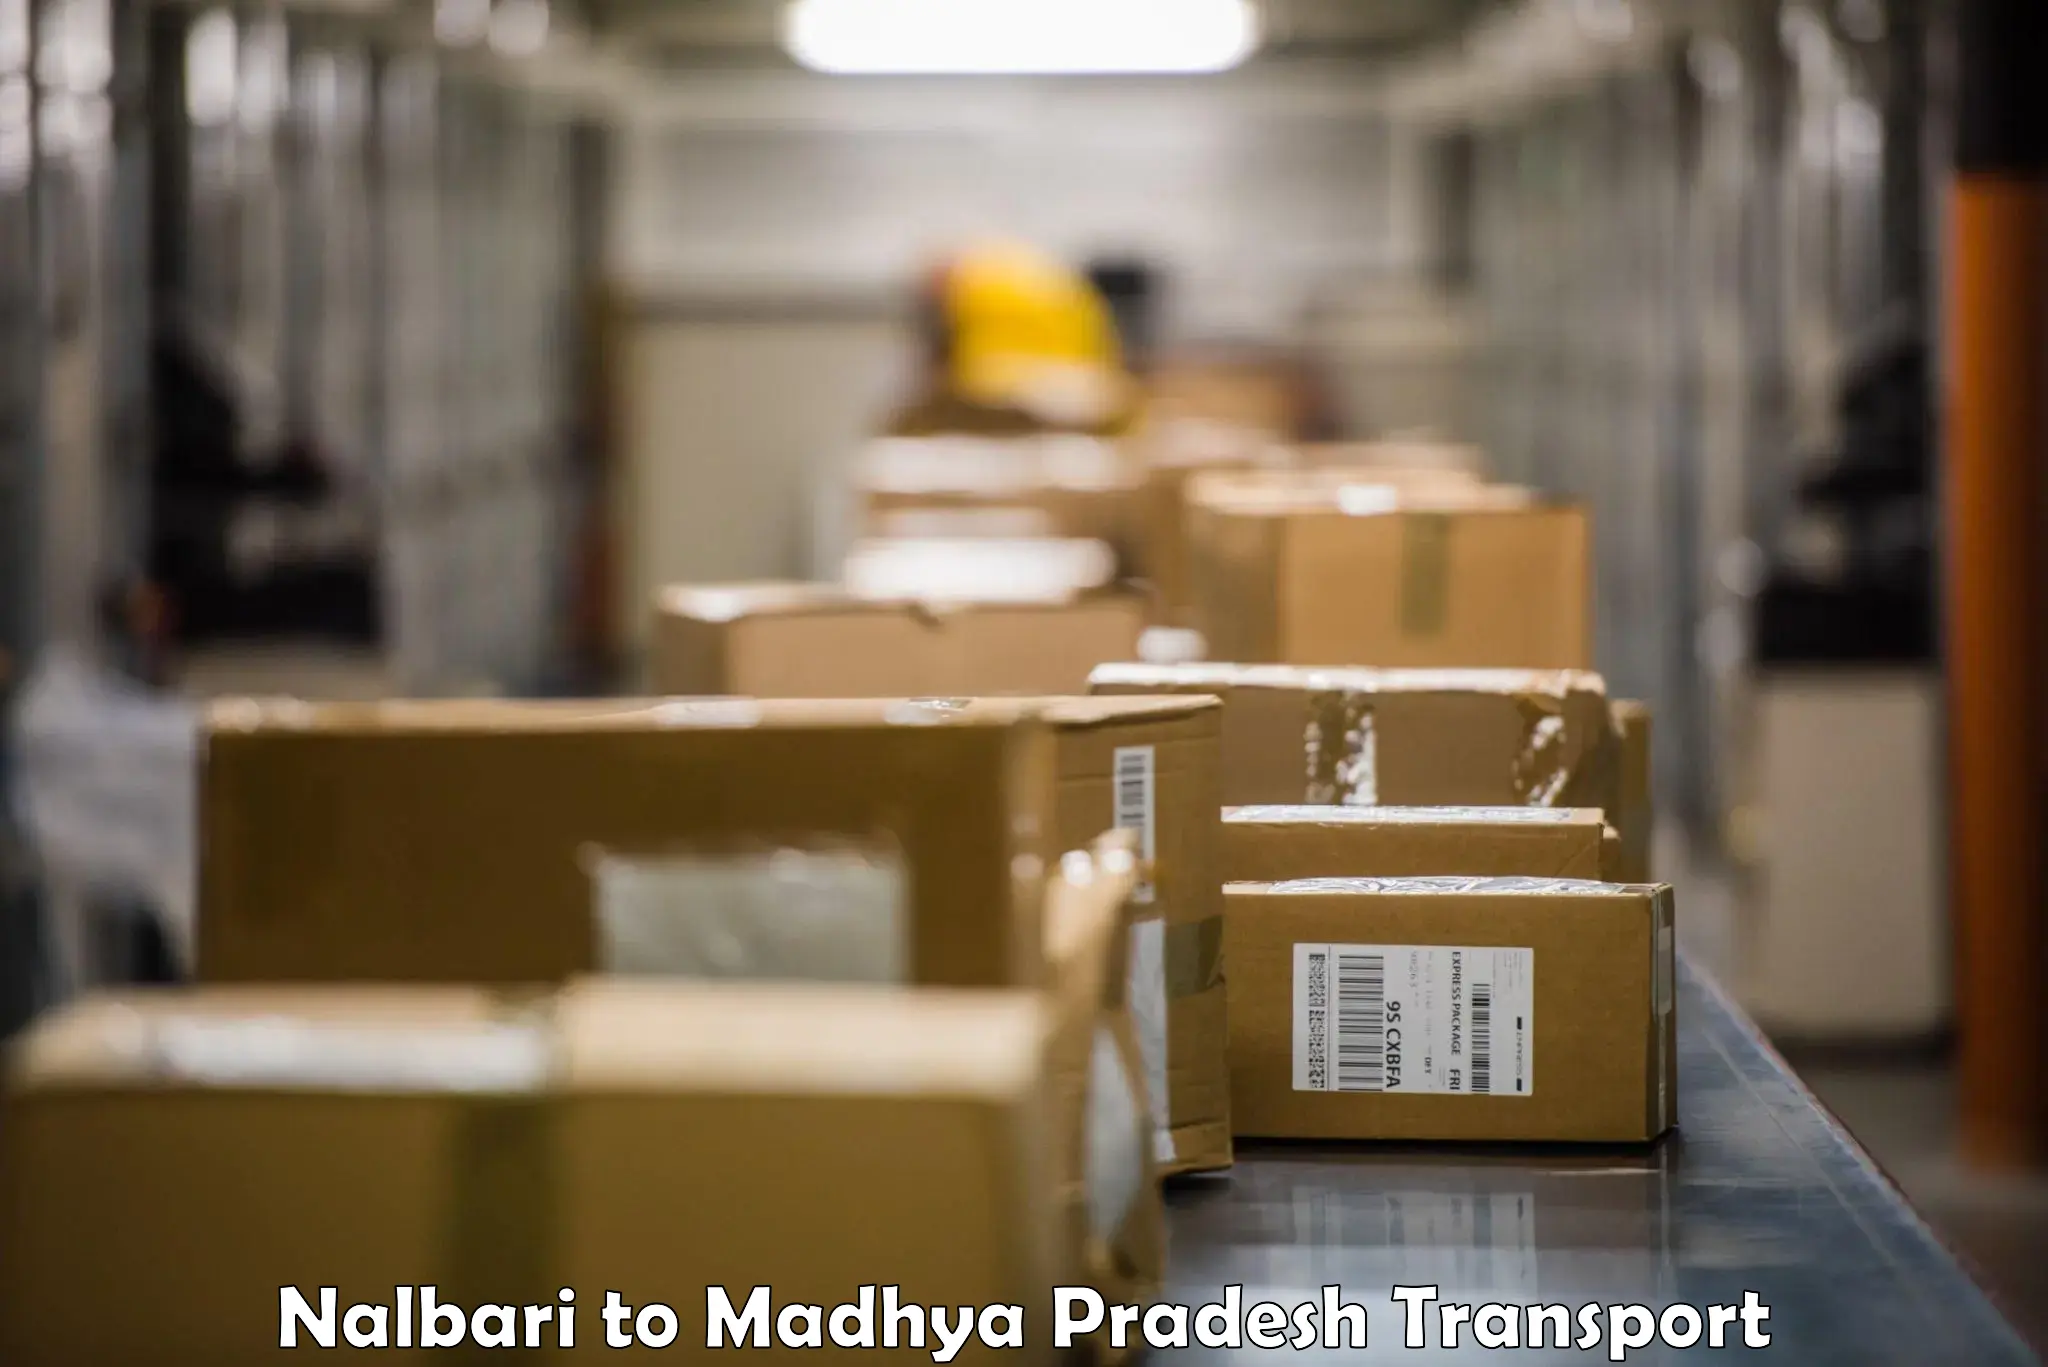 Furniture transport service Nalbari to Garoth